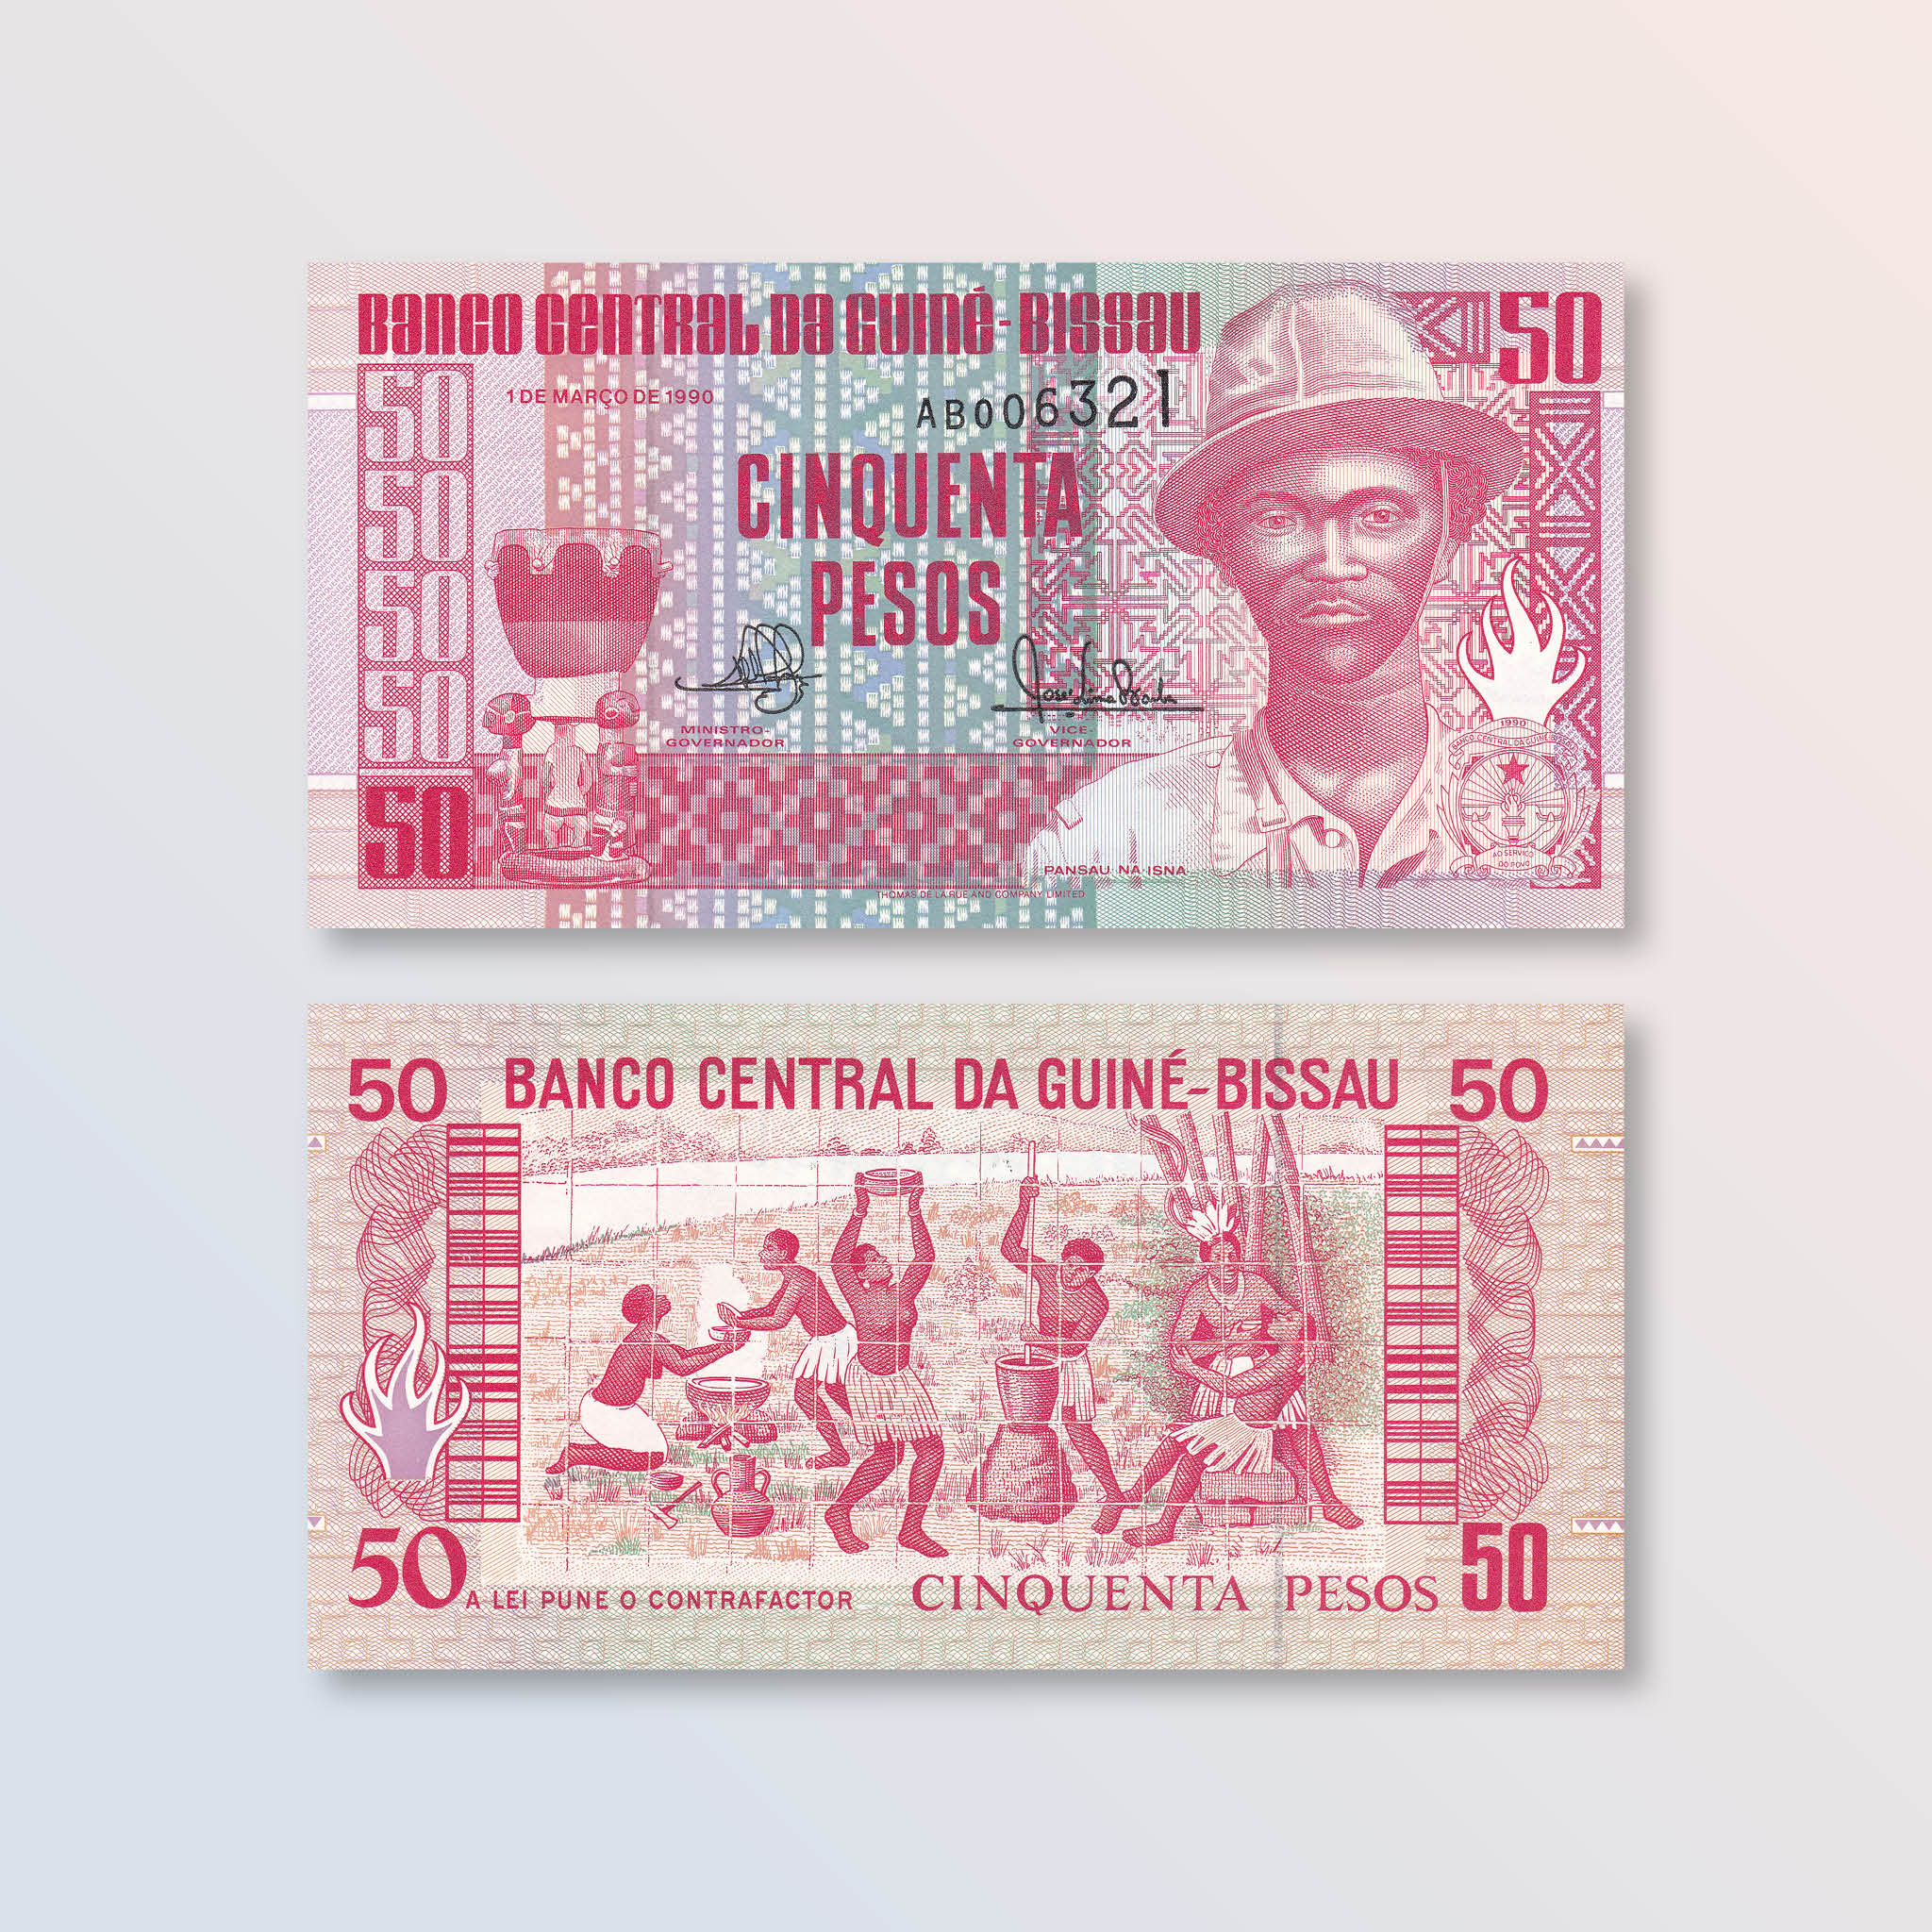 Guinea-Bissau 50 Pesos, 1990, B201a, P10, UNC - Robert's World Money - World Banknotes